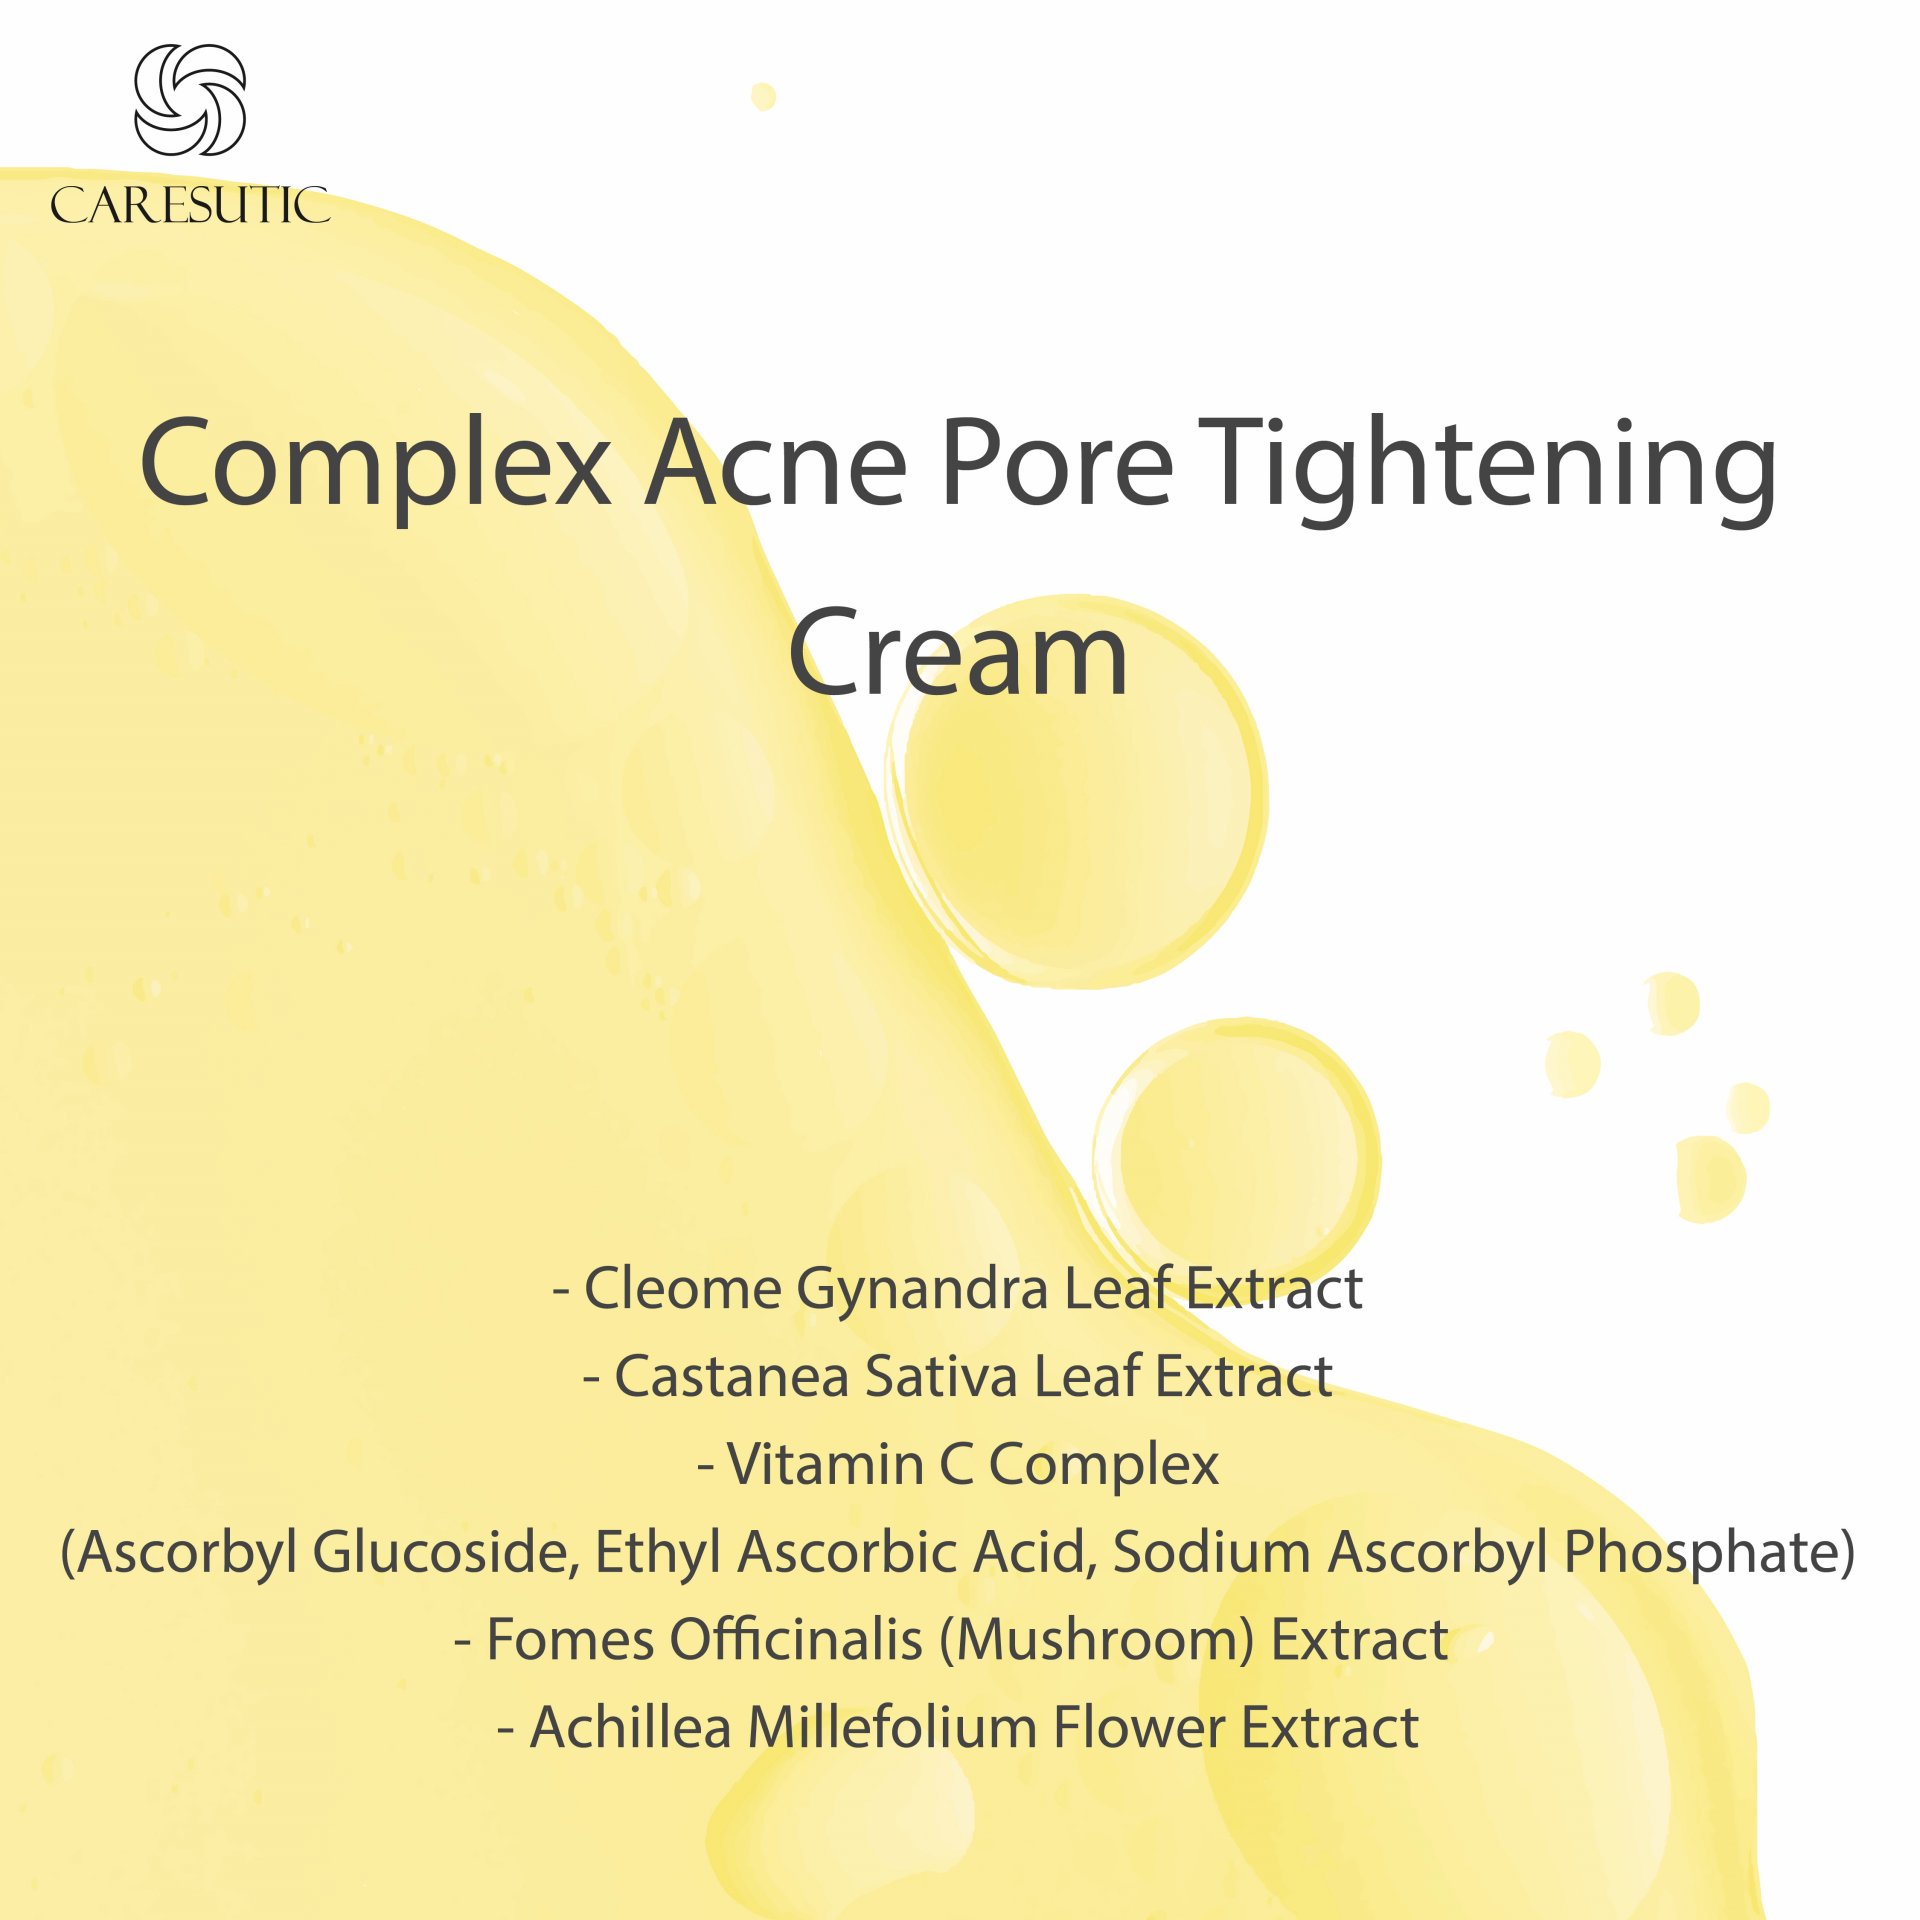 Complex Acne Pore Tightening Cream